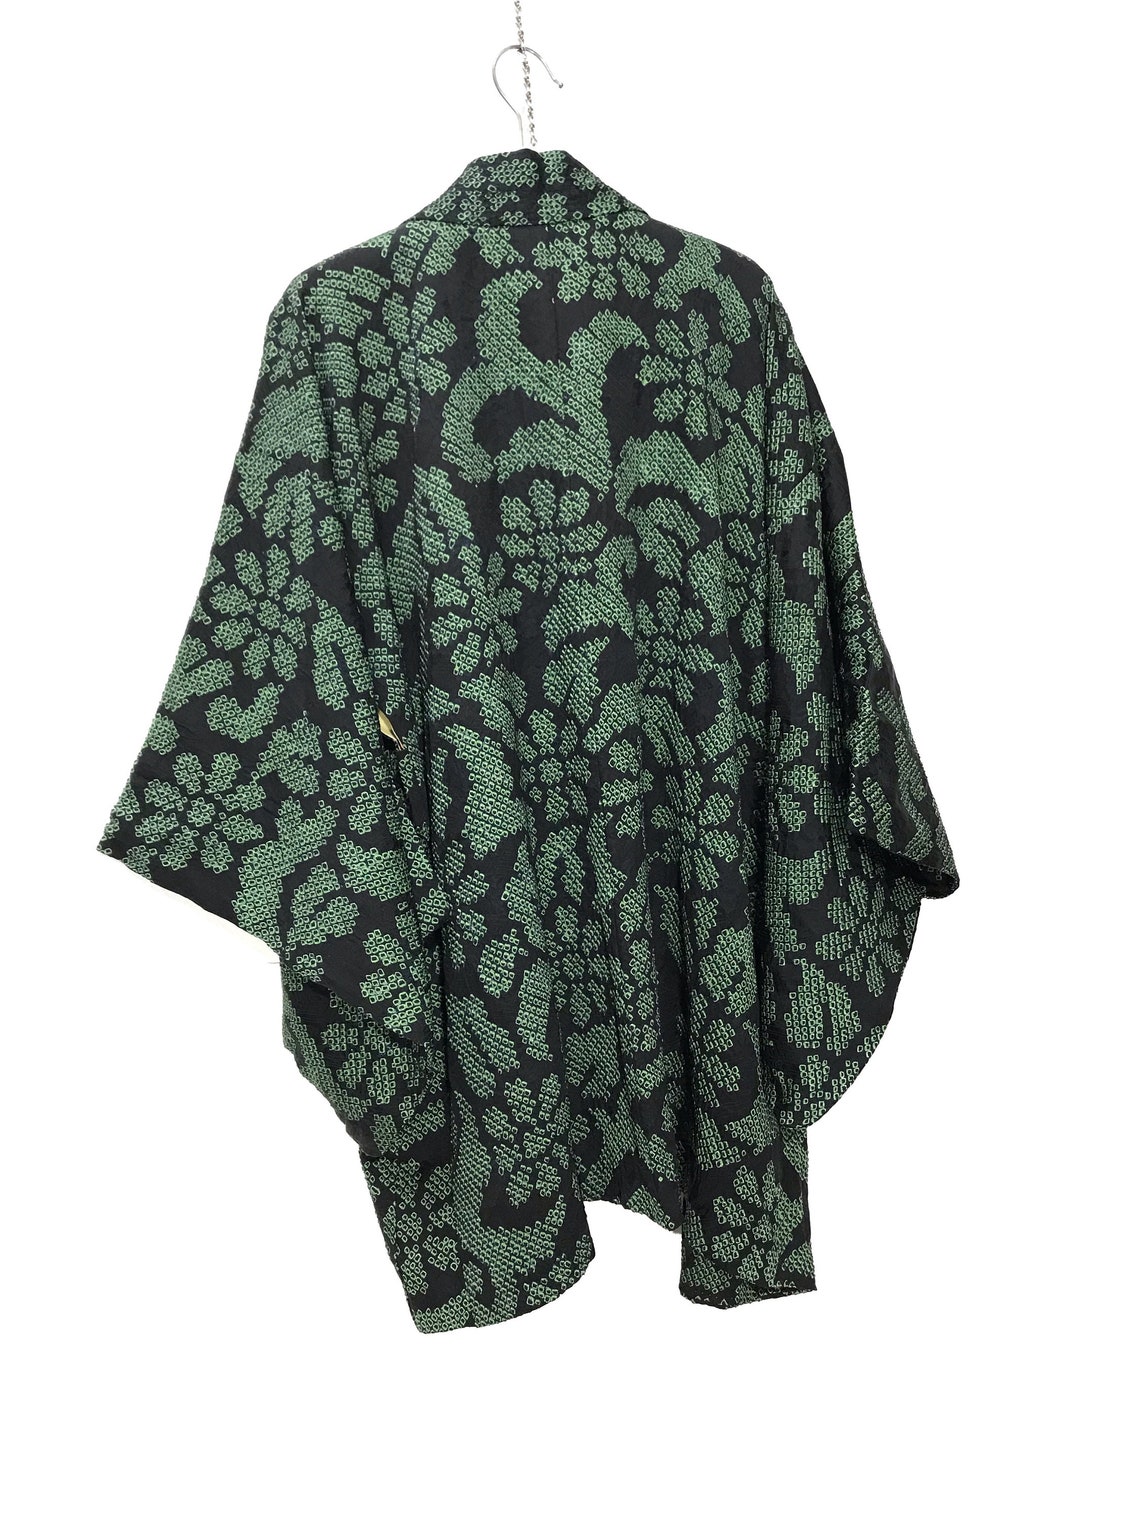 Made in Japan Vintage Haori Silk Shibori Tie Dye Florals Green | Etsy